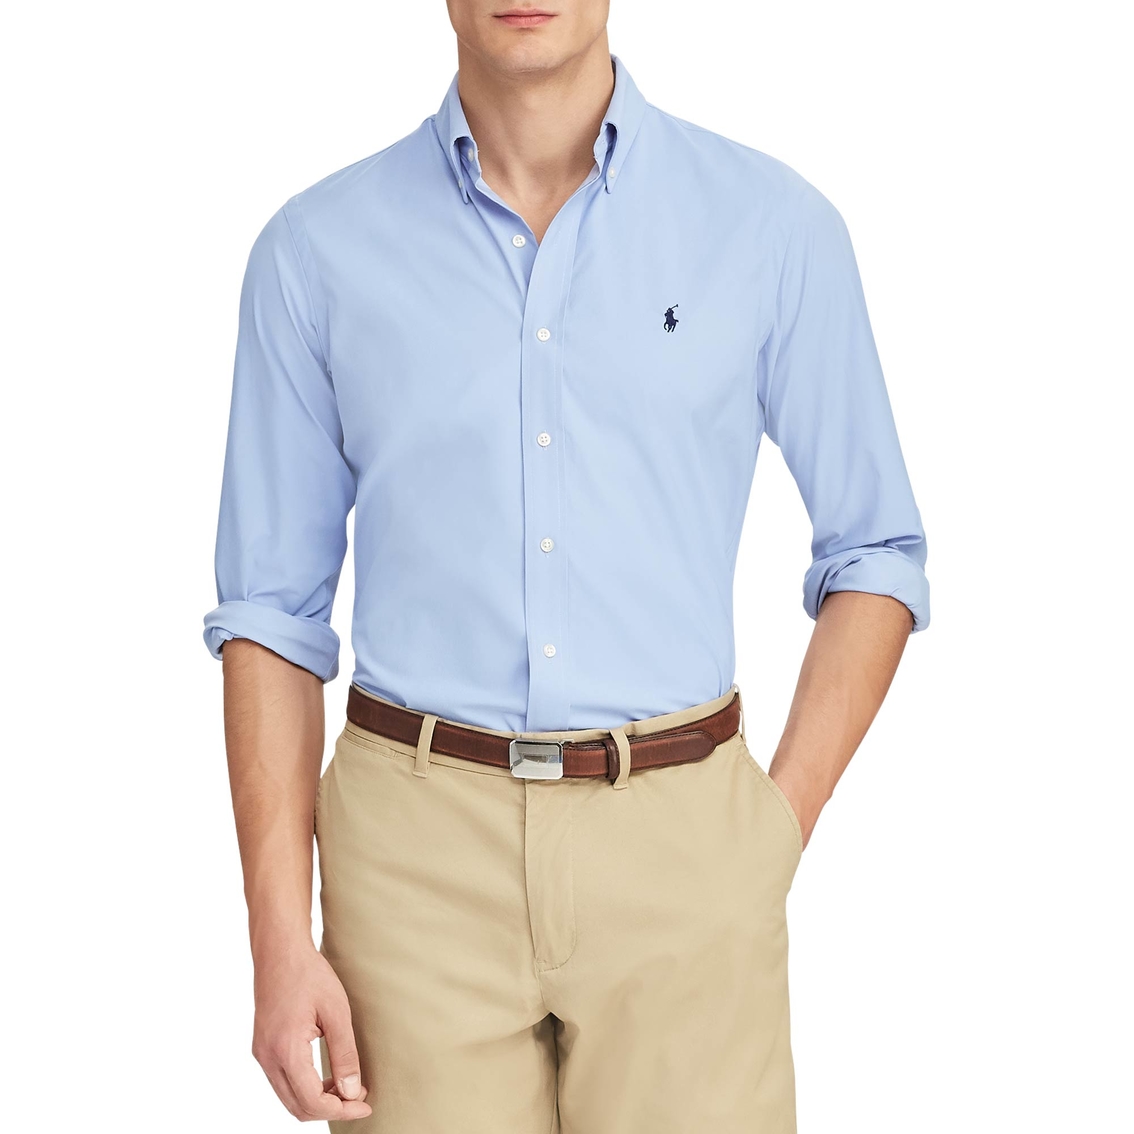 Polo Ralph Lauren Classic Fit Performance Shirt | Shirts | Clothing ...